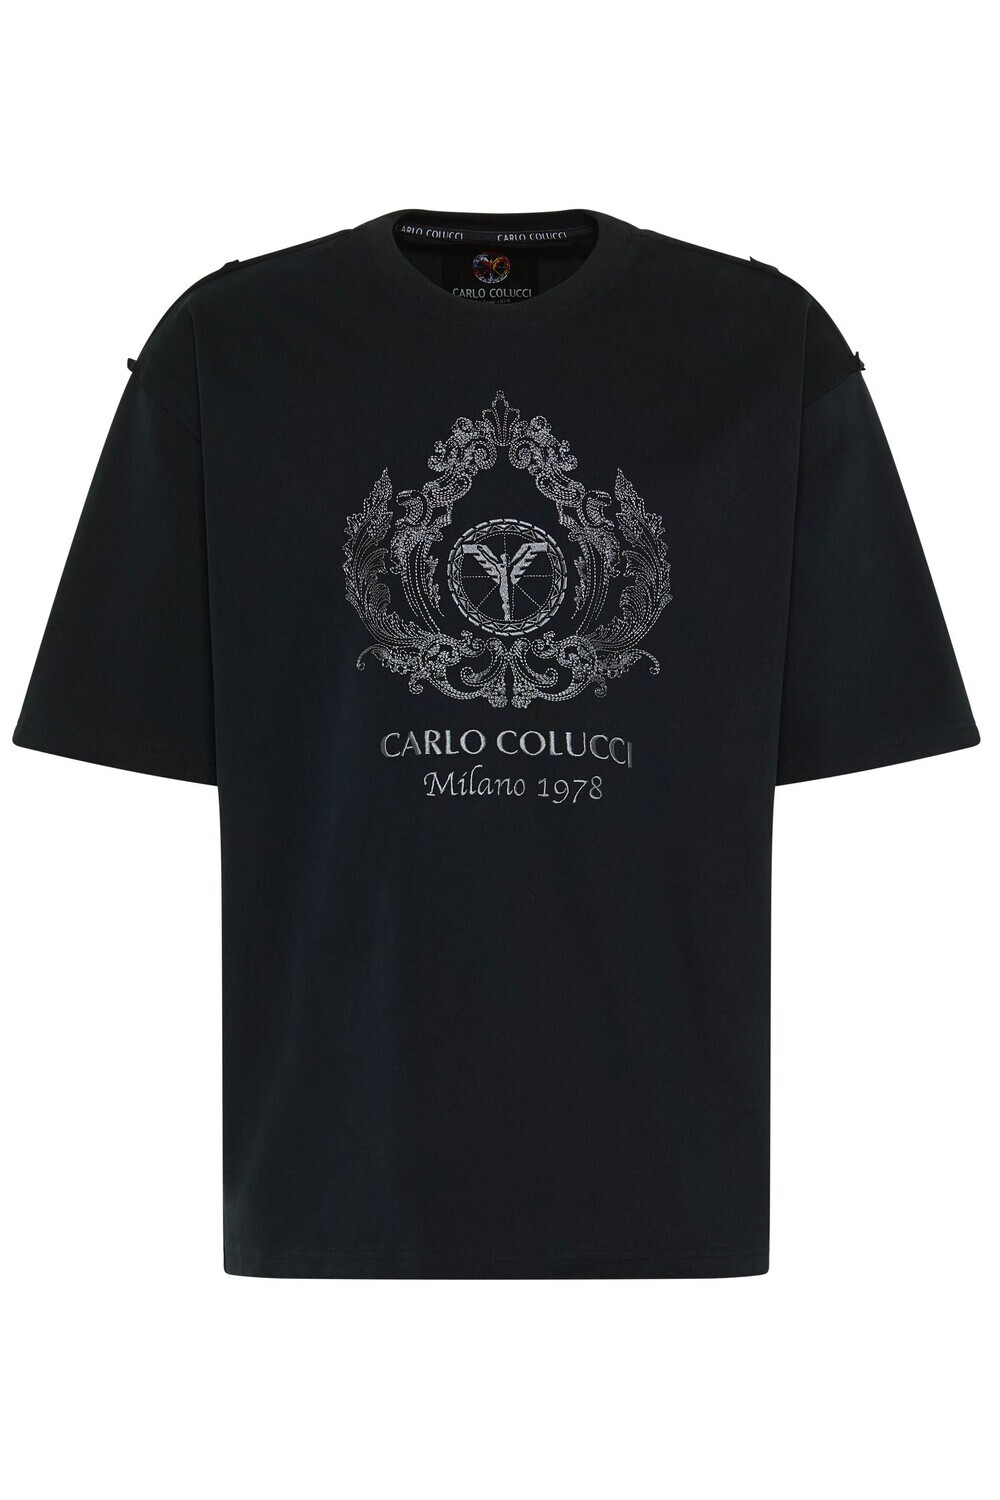 Carlo Colucci Shirt